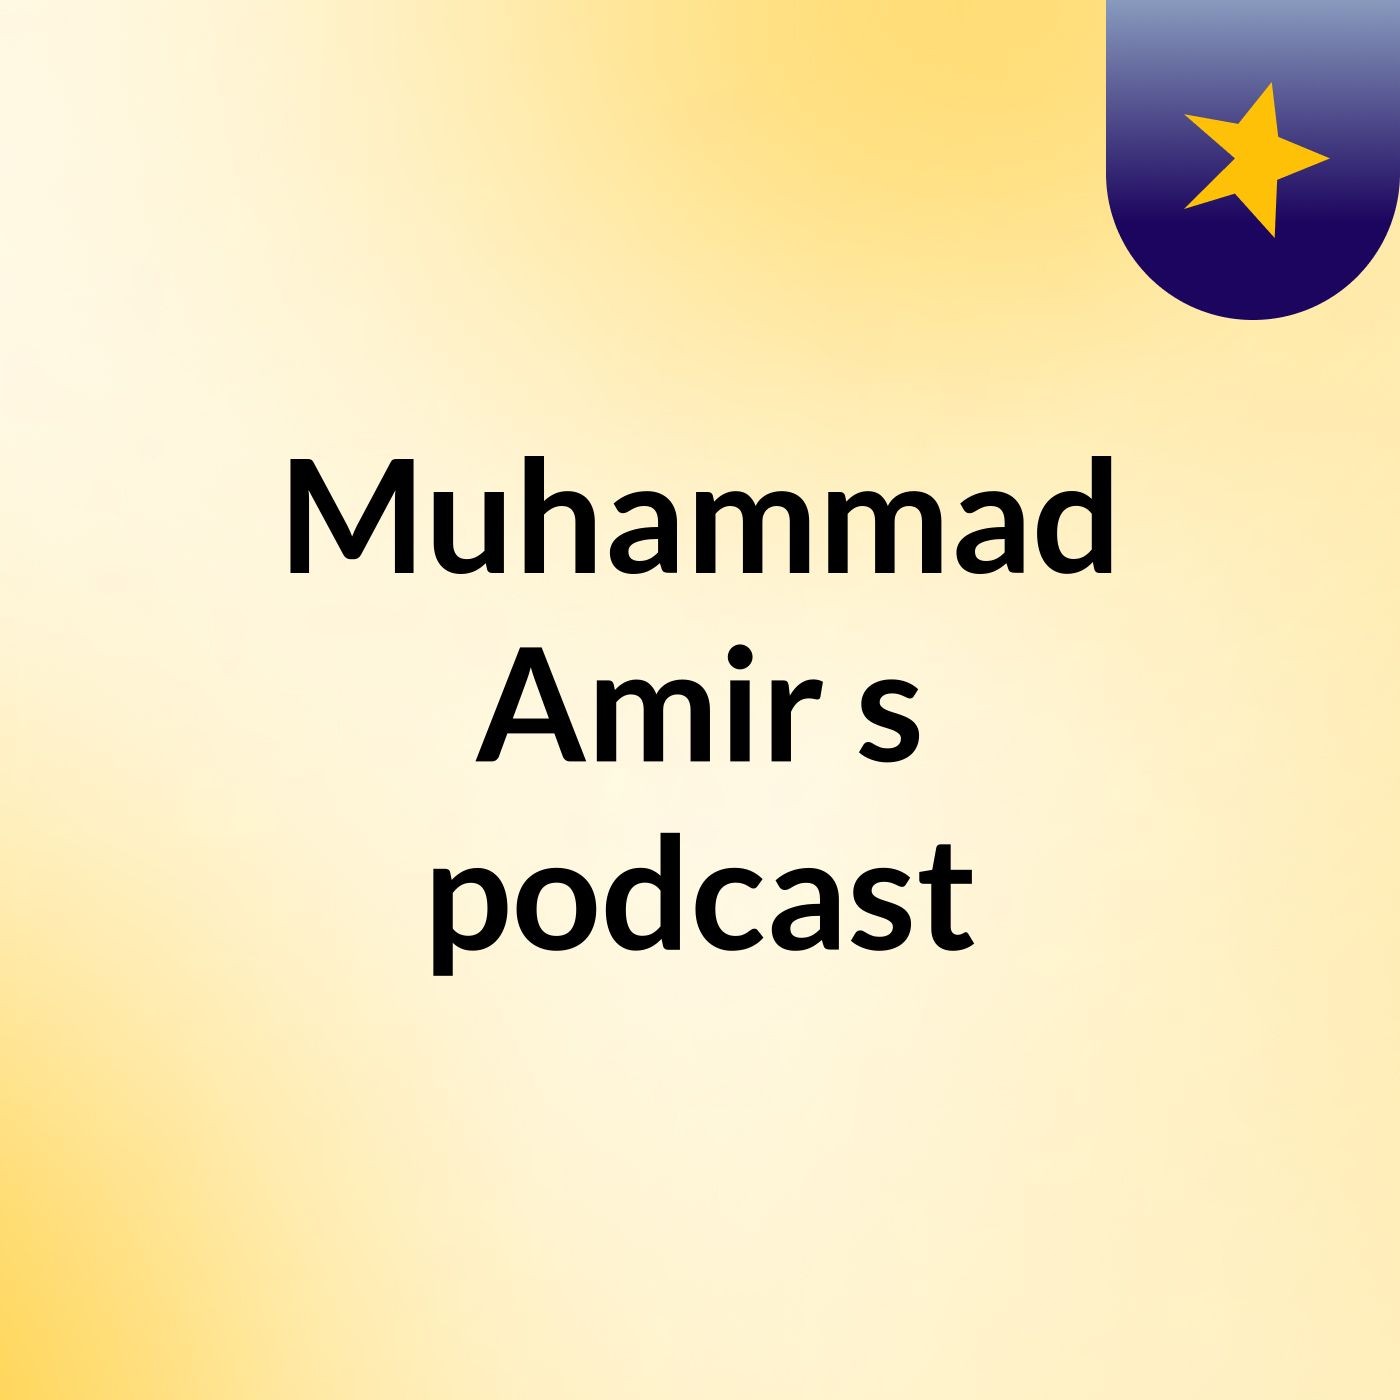 Muhammad Amir's podcast